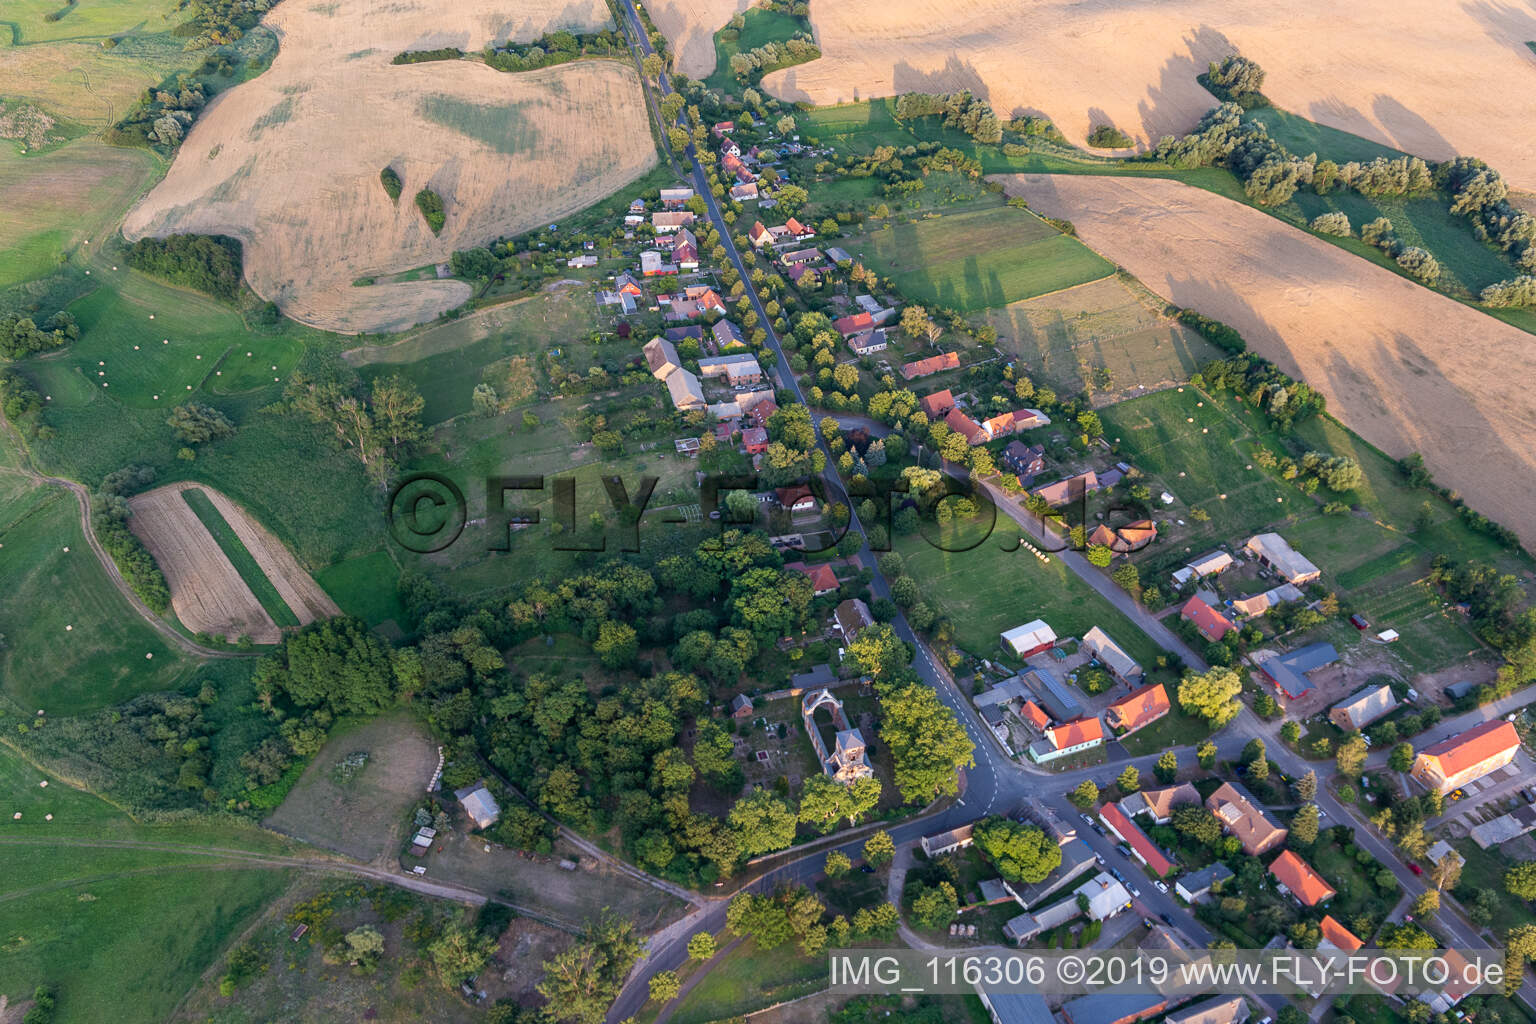 Aerial photograpy of Flieth-Stegelitz in the state Brandenburg, Germany